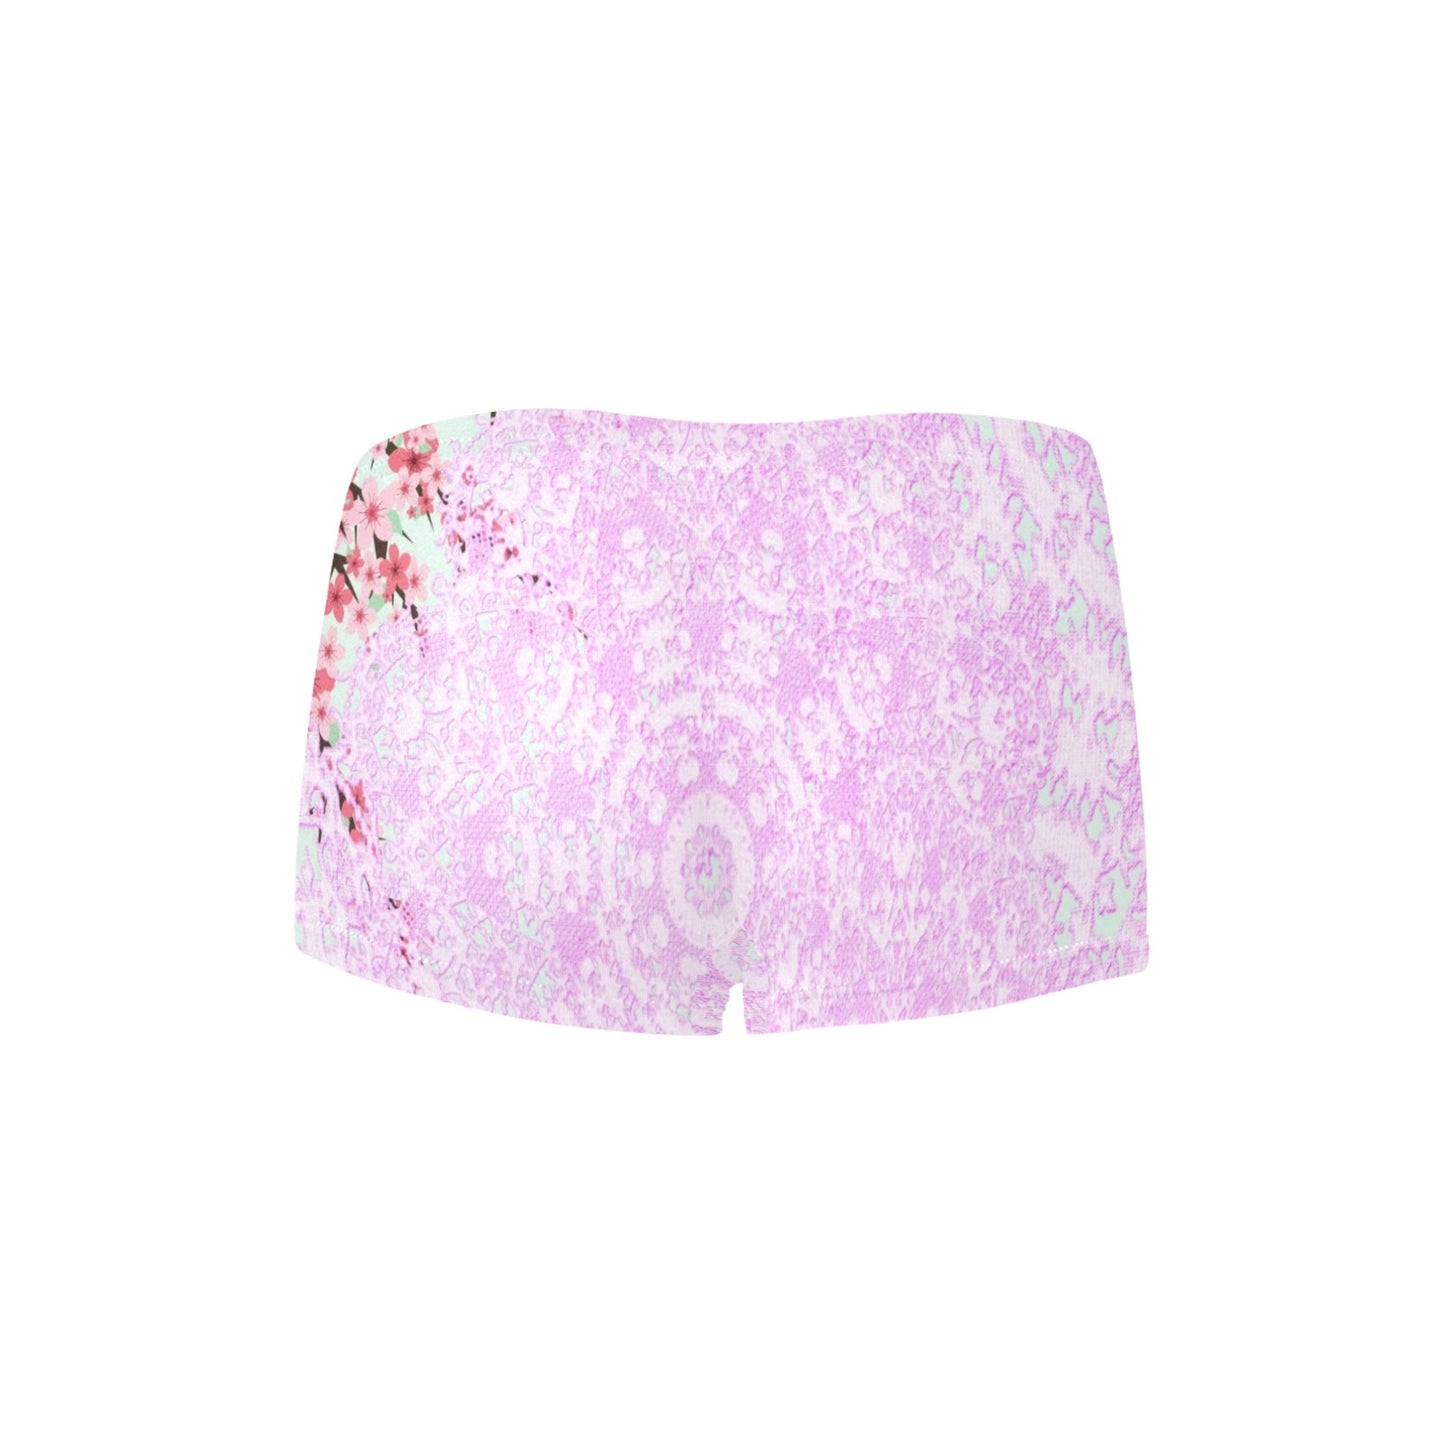 Printed Lace Boyshorts, daisy dukes, pum pum shorts, shortie shorts , design 09